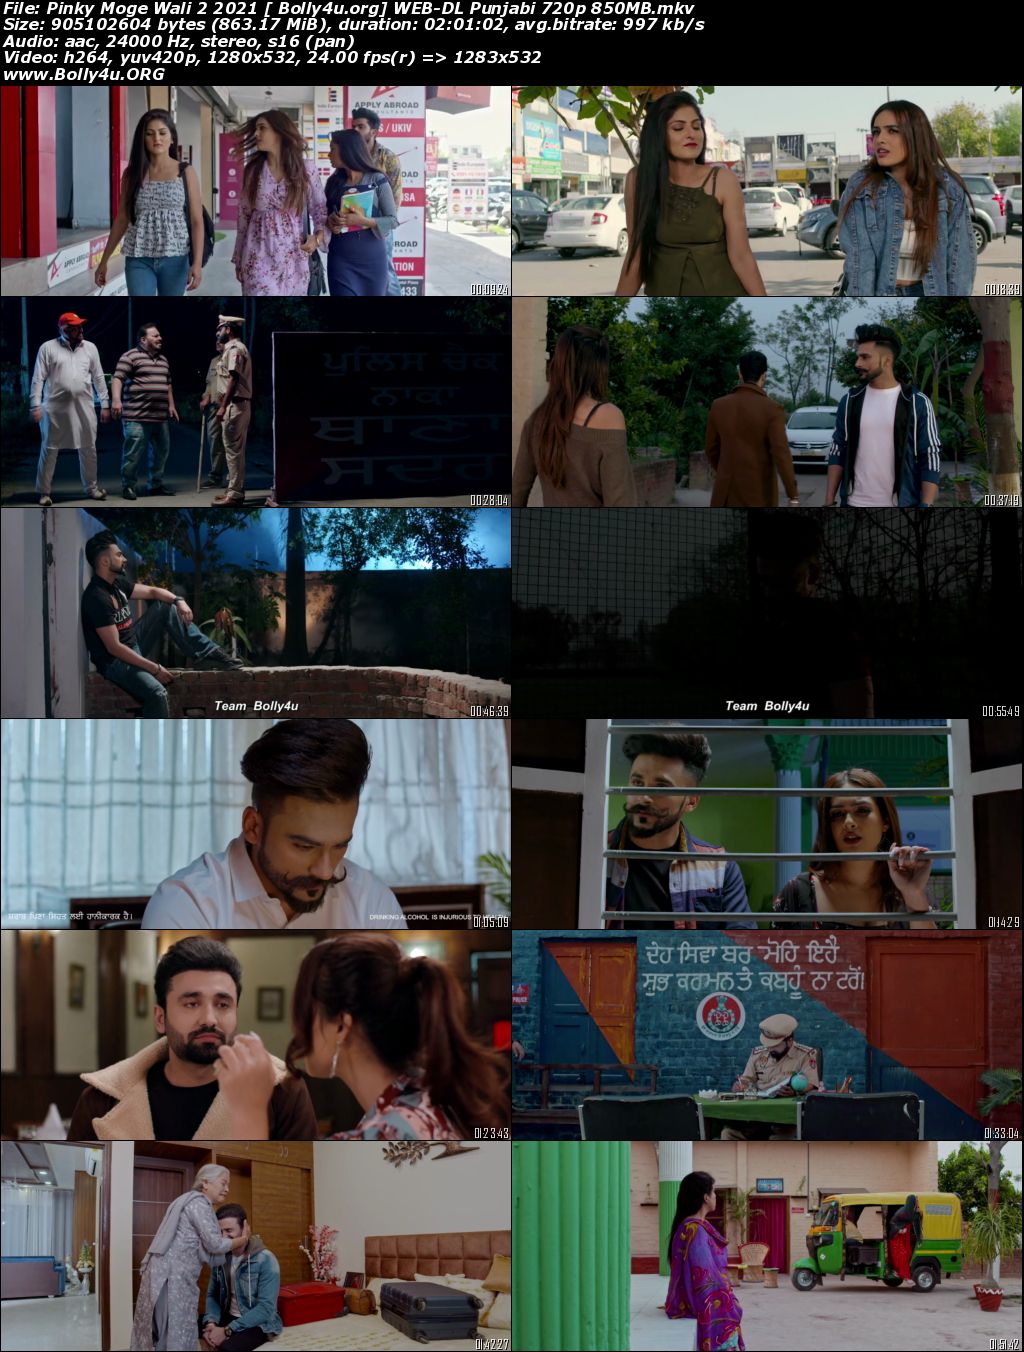 Pinky Moge Wali 2 2021 WEB-DL 850Mb Punjabi Movie Download 720p